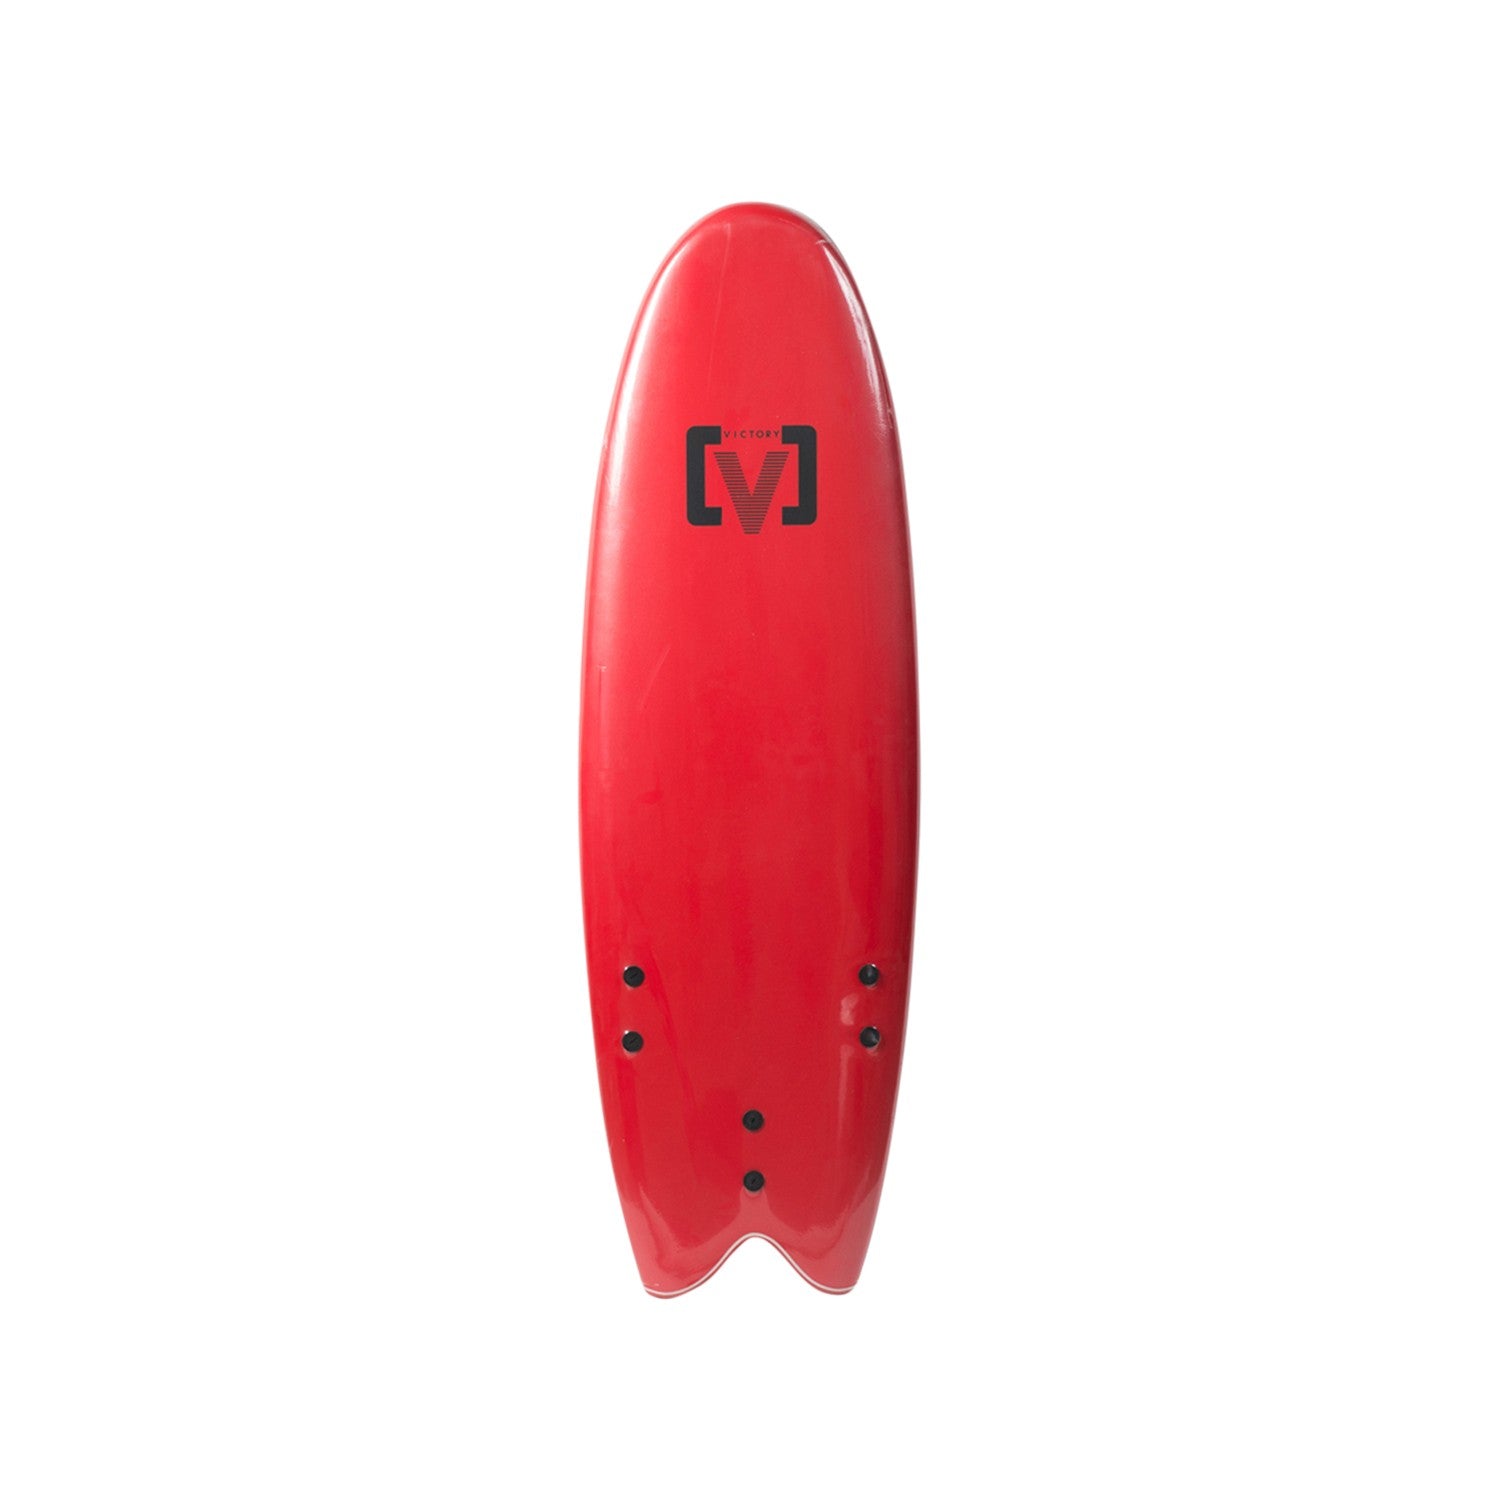 VICTORY - EPS Softboard - Foam Surfboard - Fish 5'6 - Red